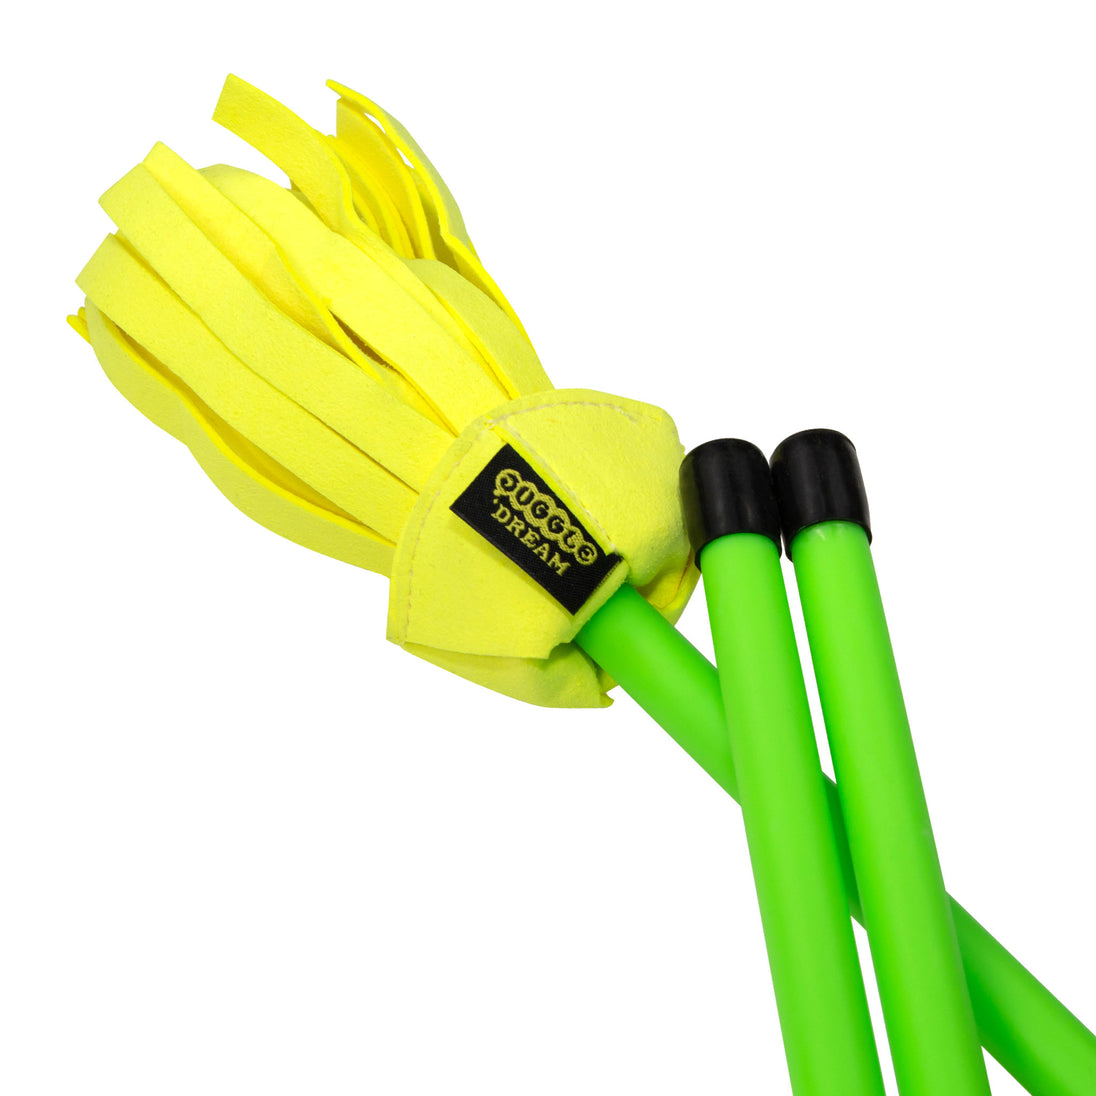 Close-up of Yellow/ Green Flower Stick tassels with handsticks